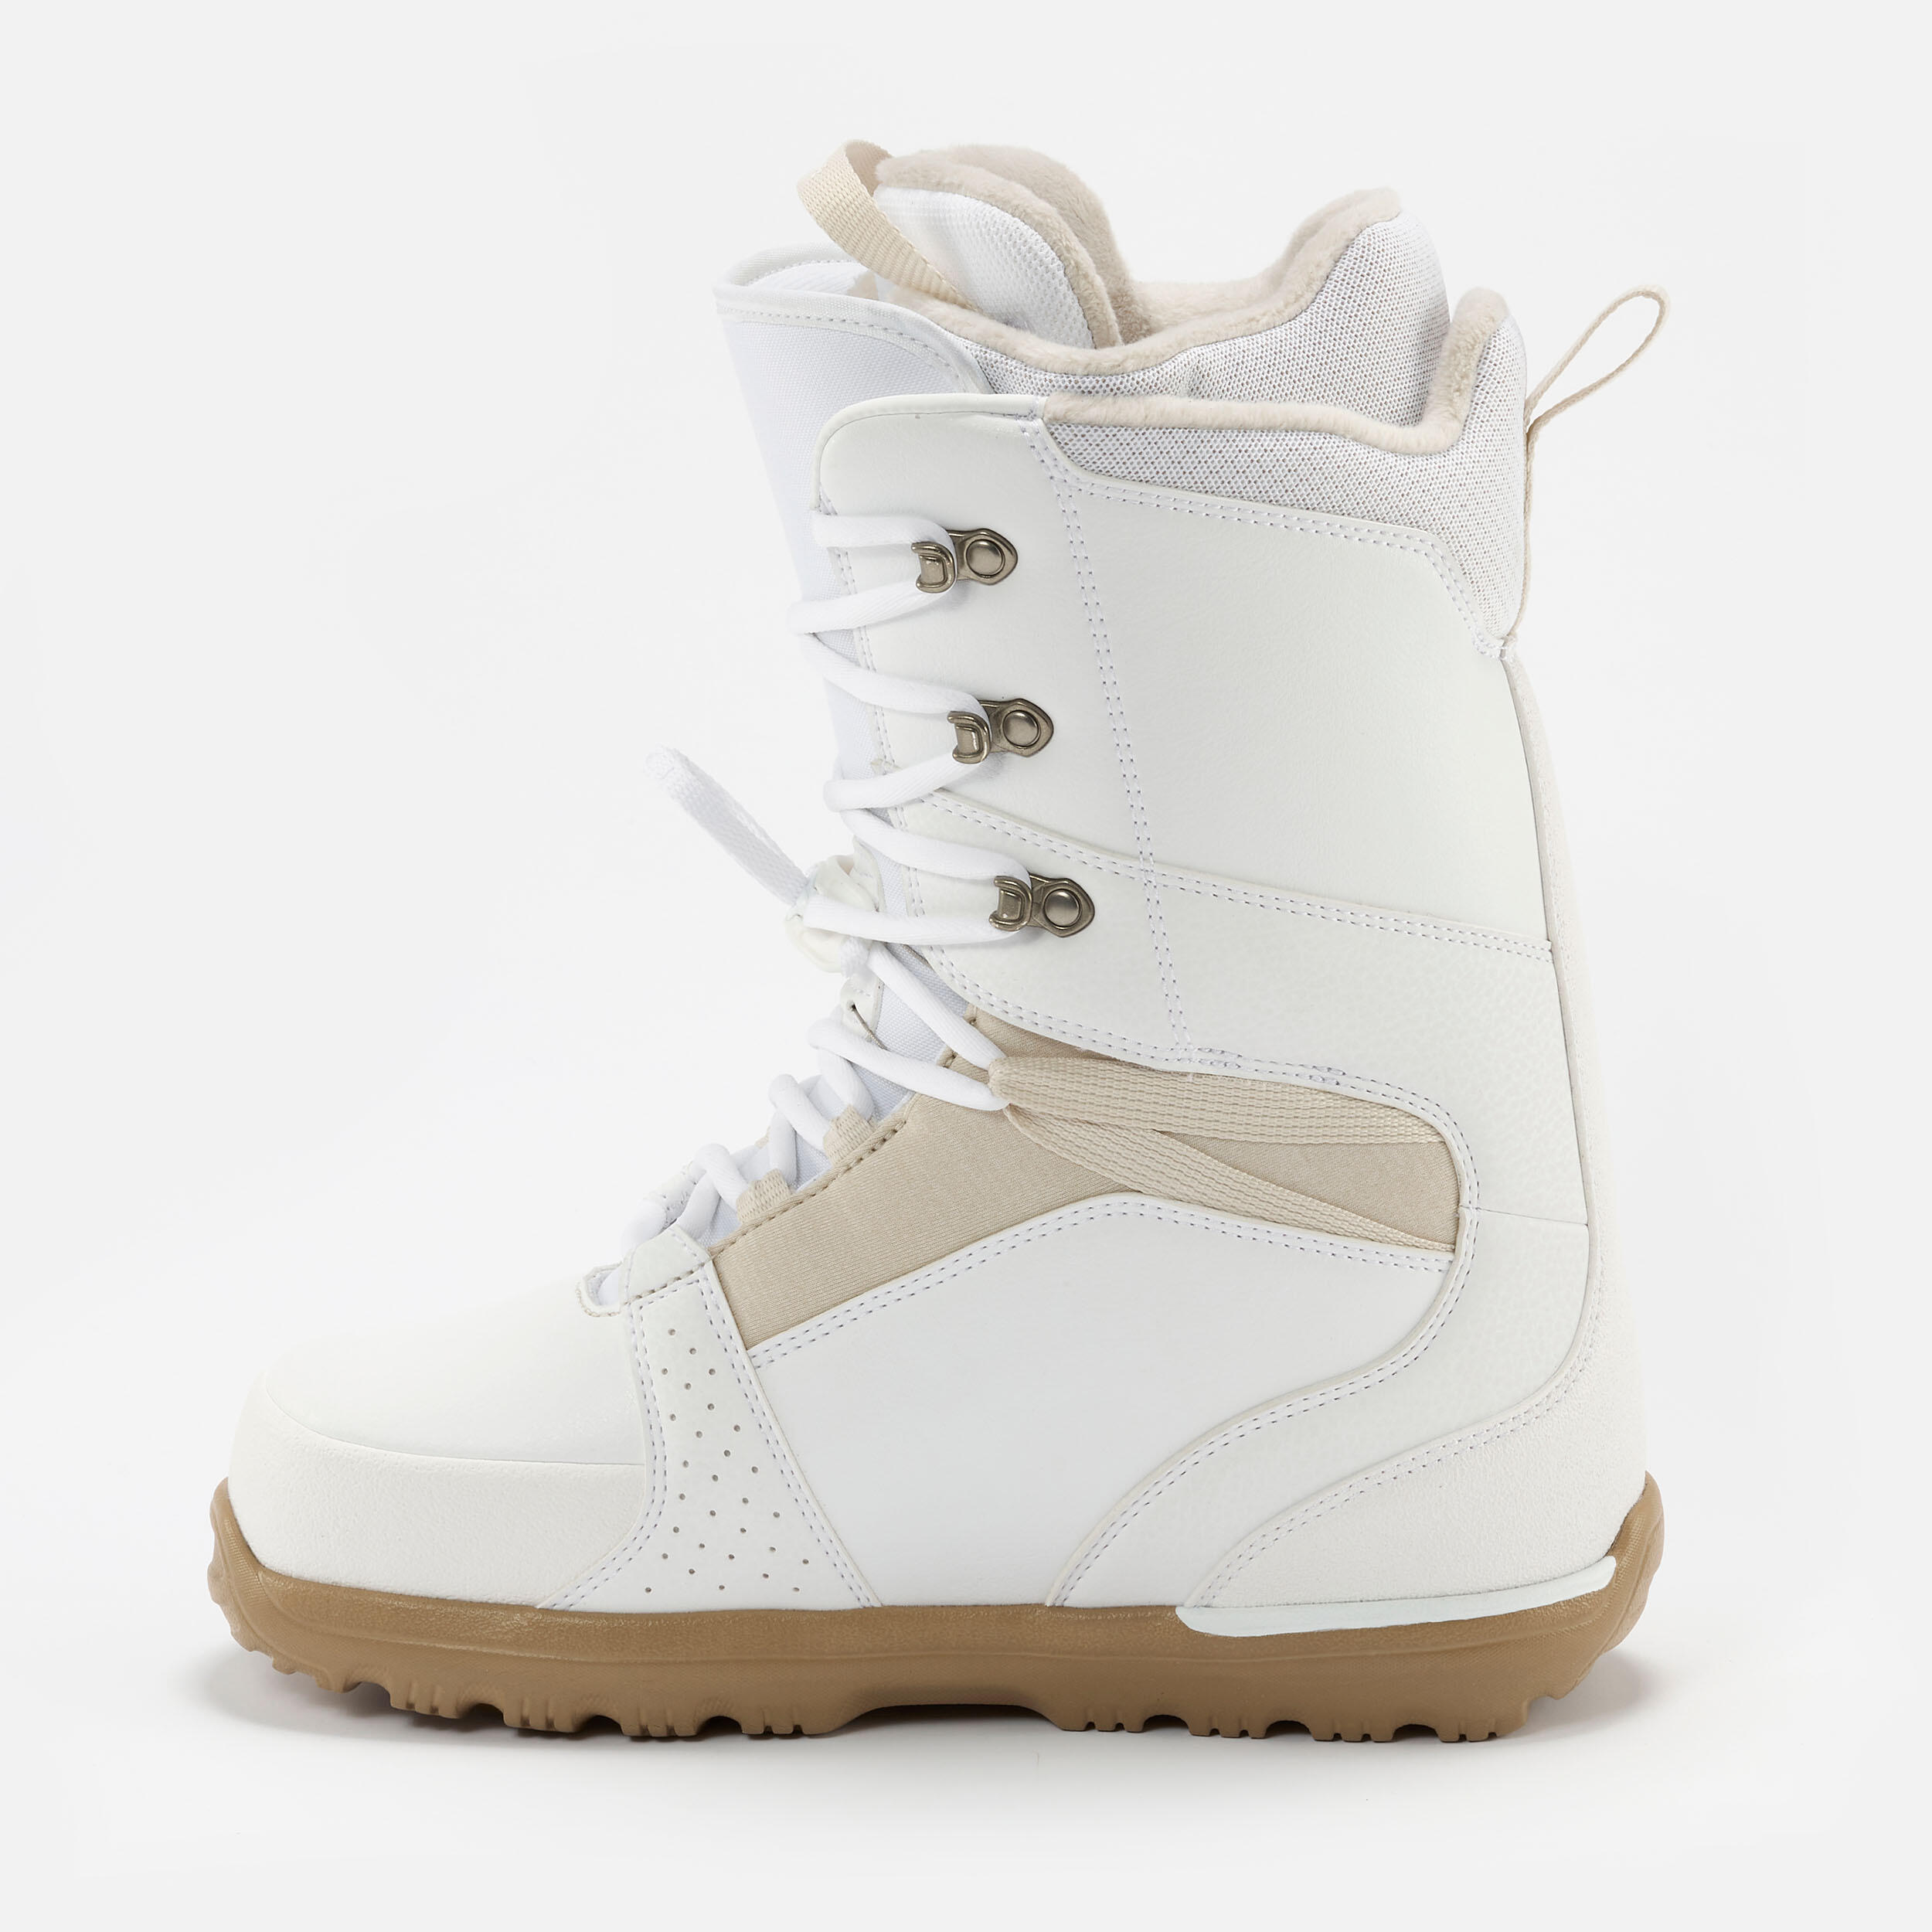 Women's hybrid snowboard boots, medium flex - Endzone white 3/14